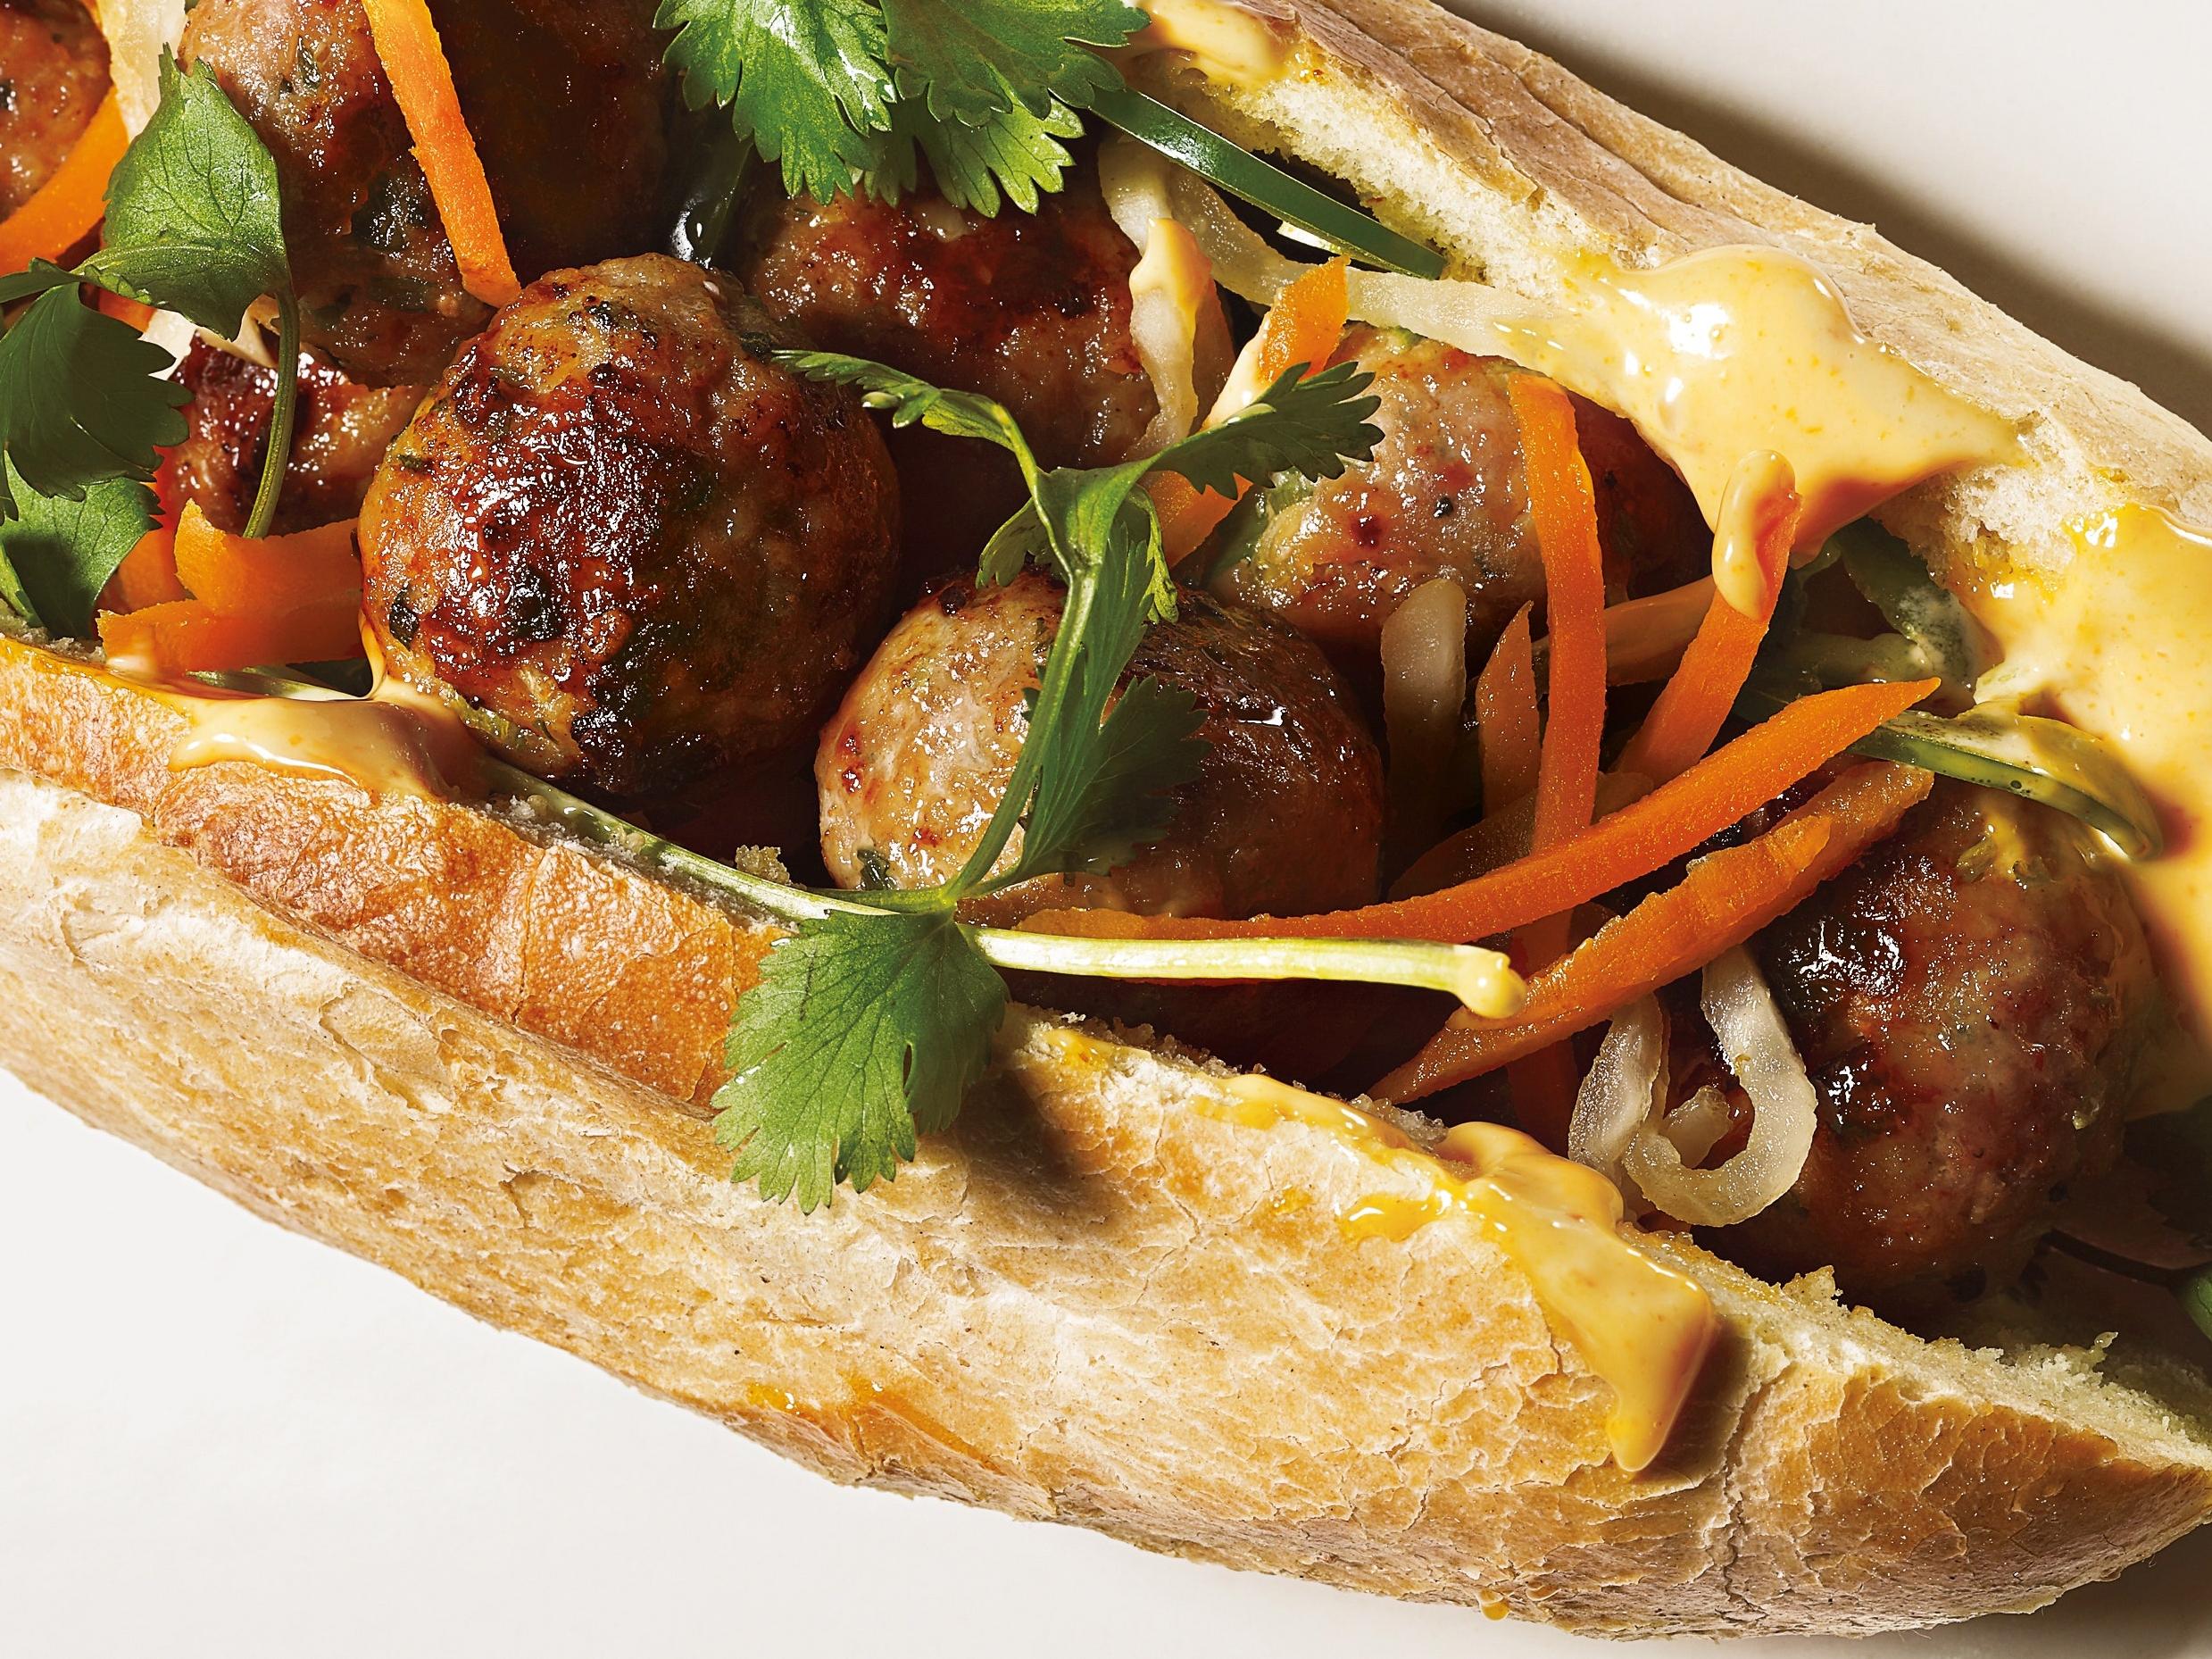 Tasty and Authentic Vietnamese Style Pork Meatball Sandwich